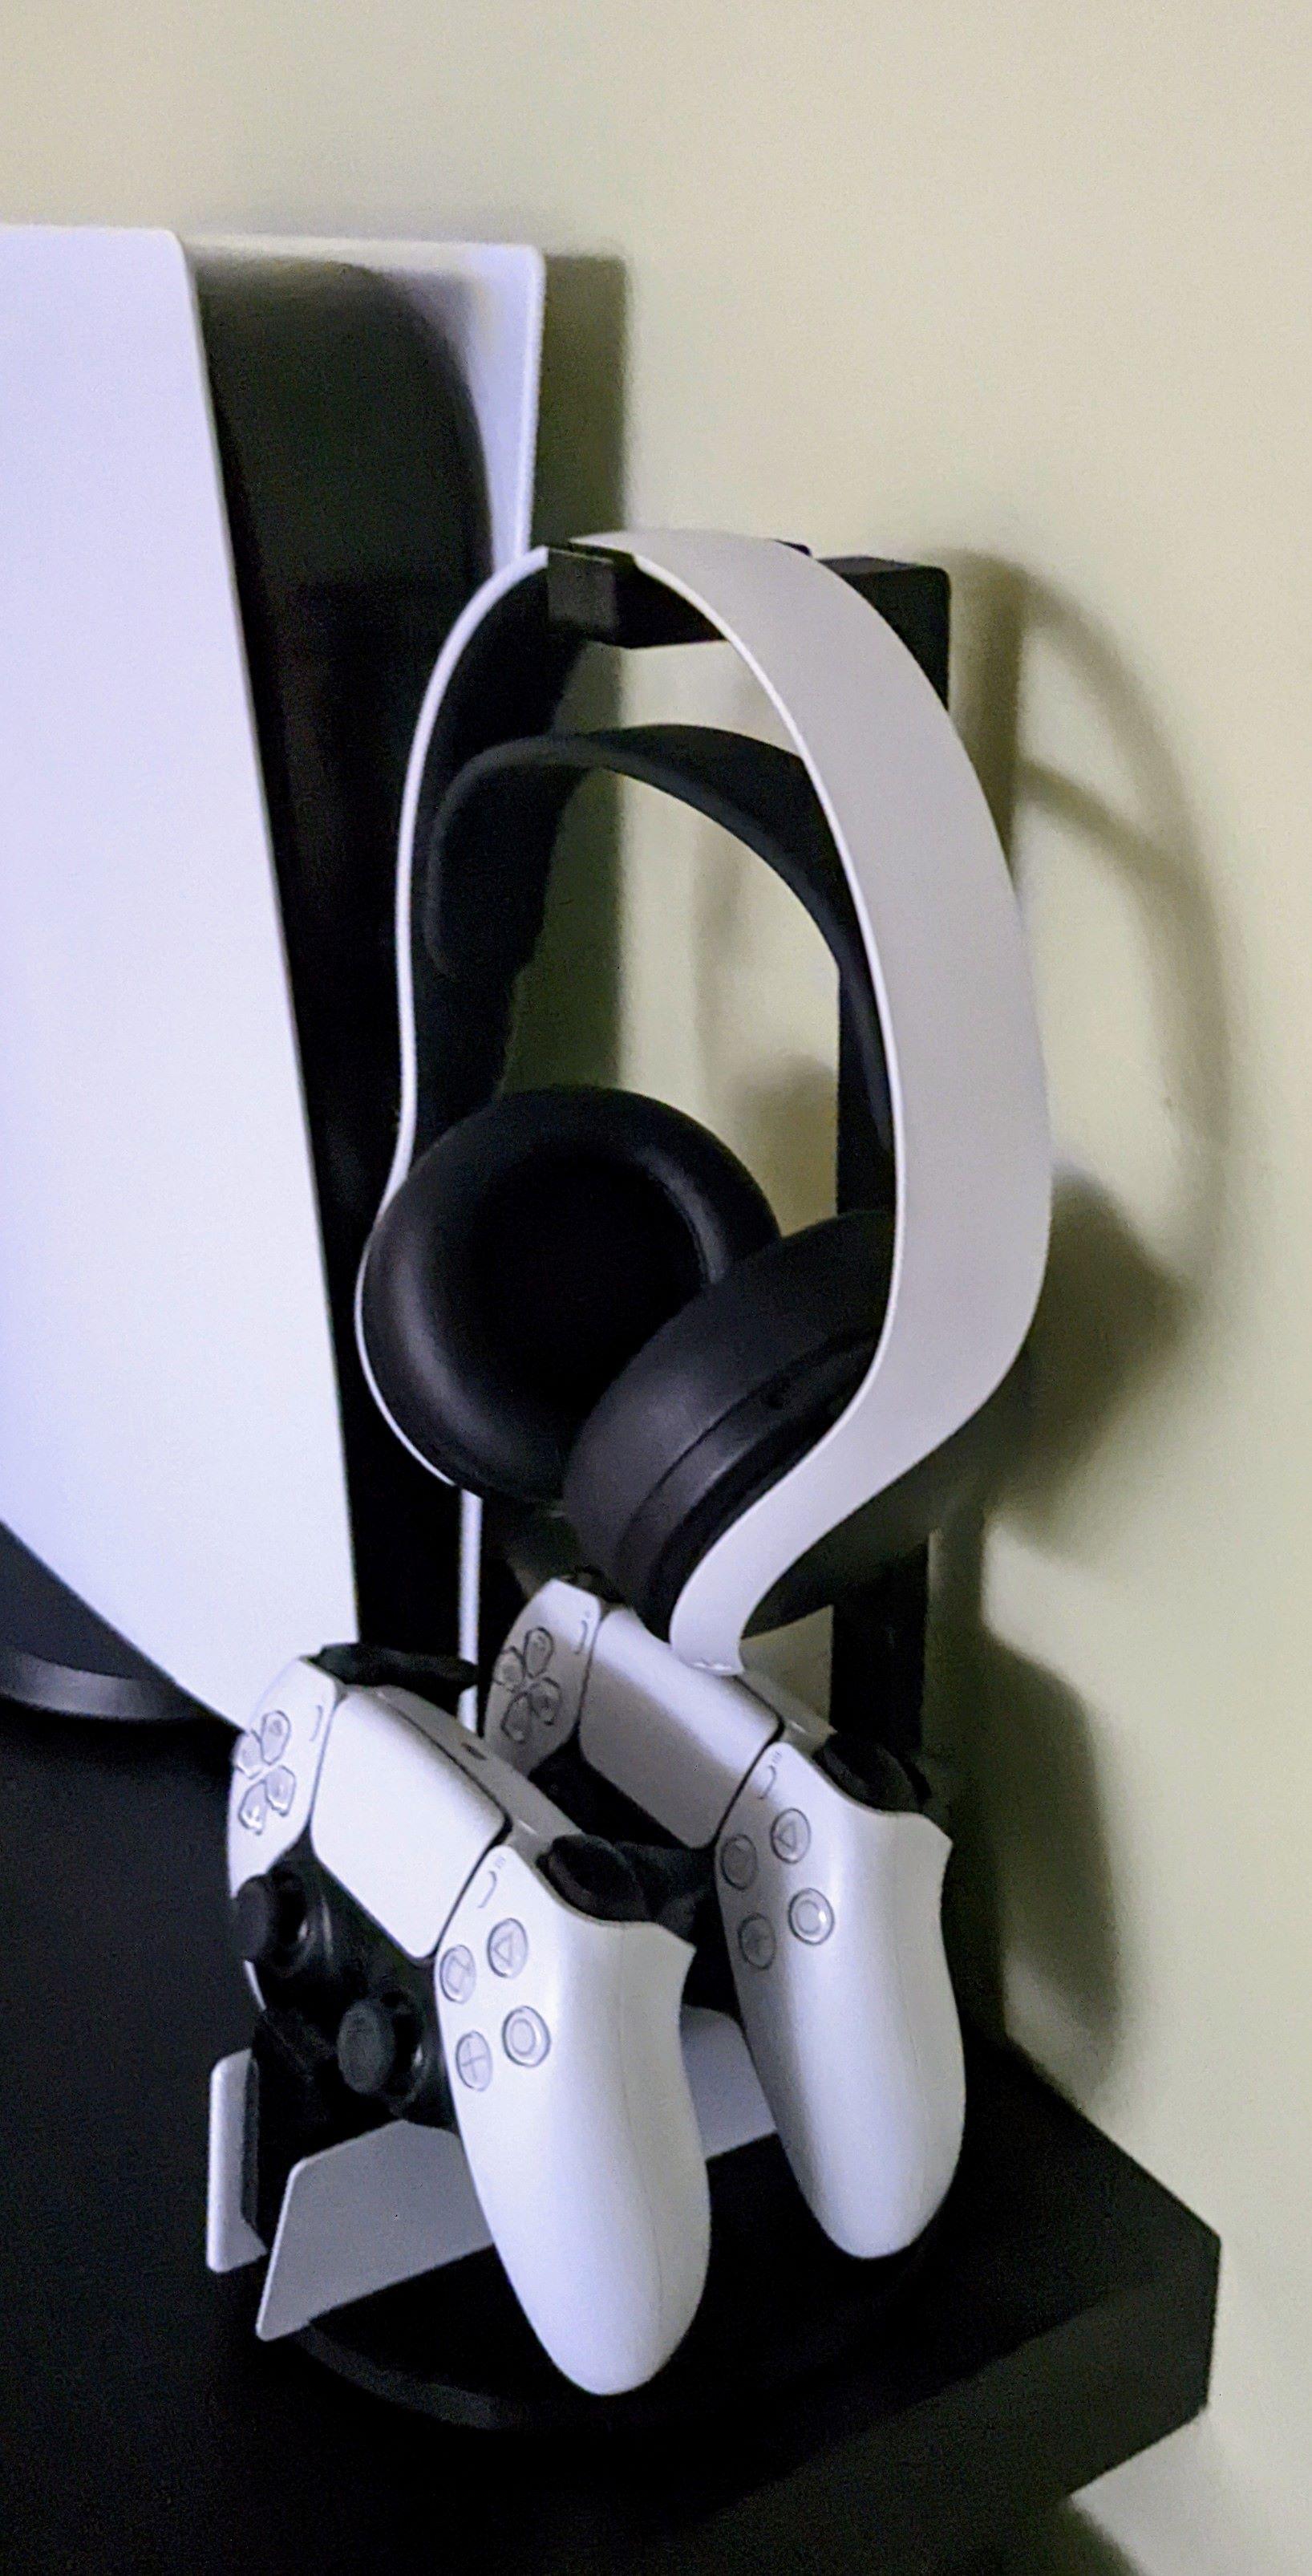 PS5 headphone hanger and base for Dual Sense charging station 3d model